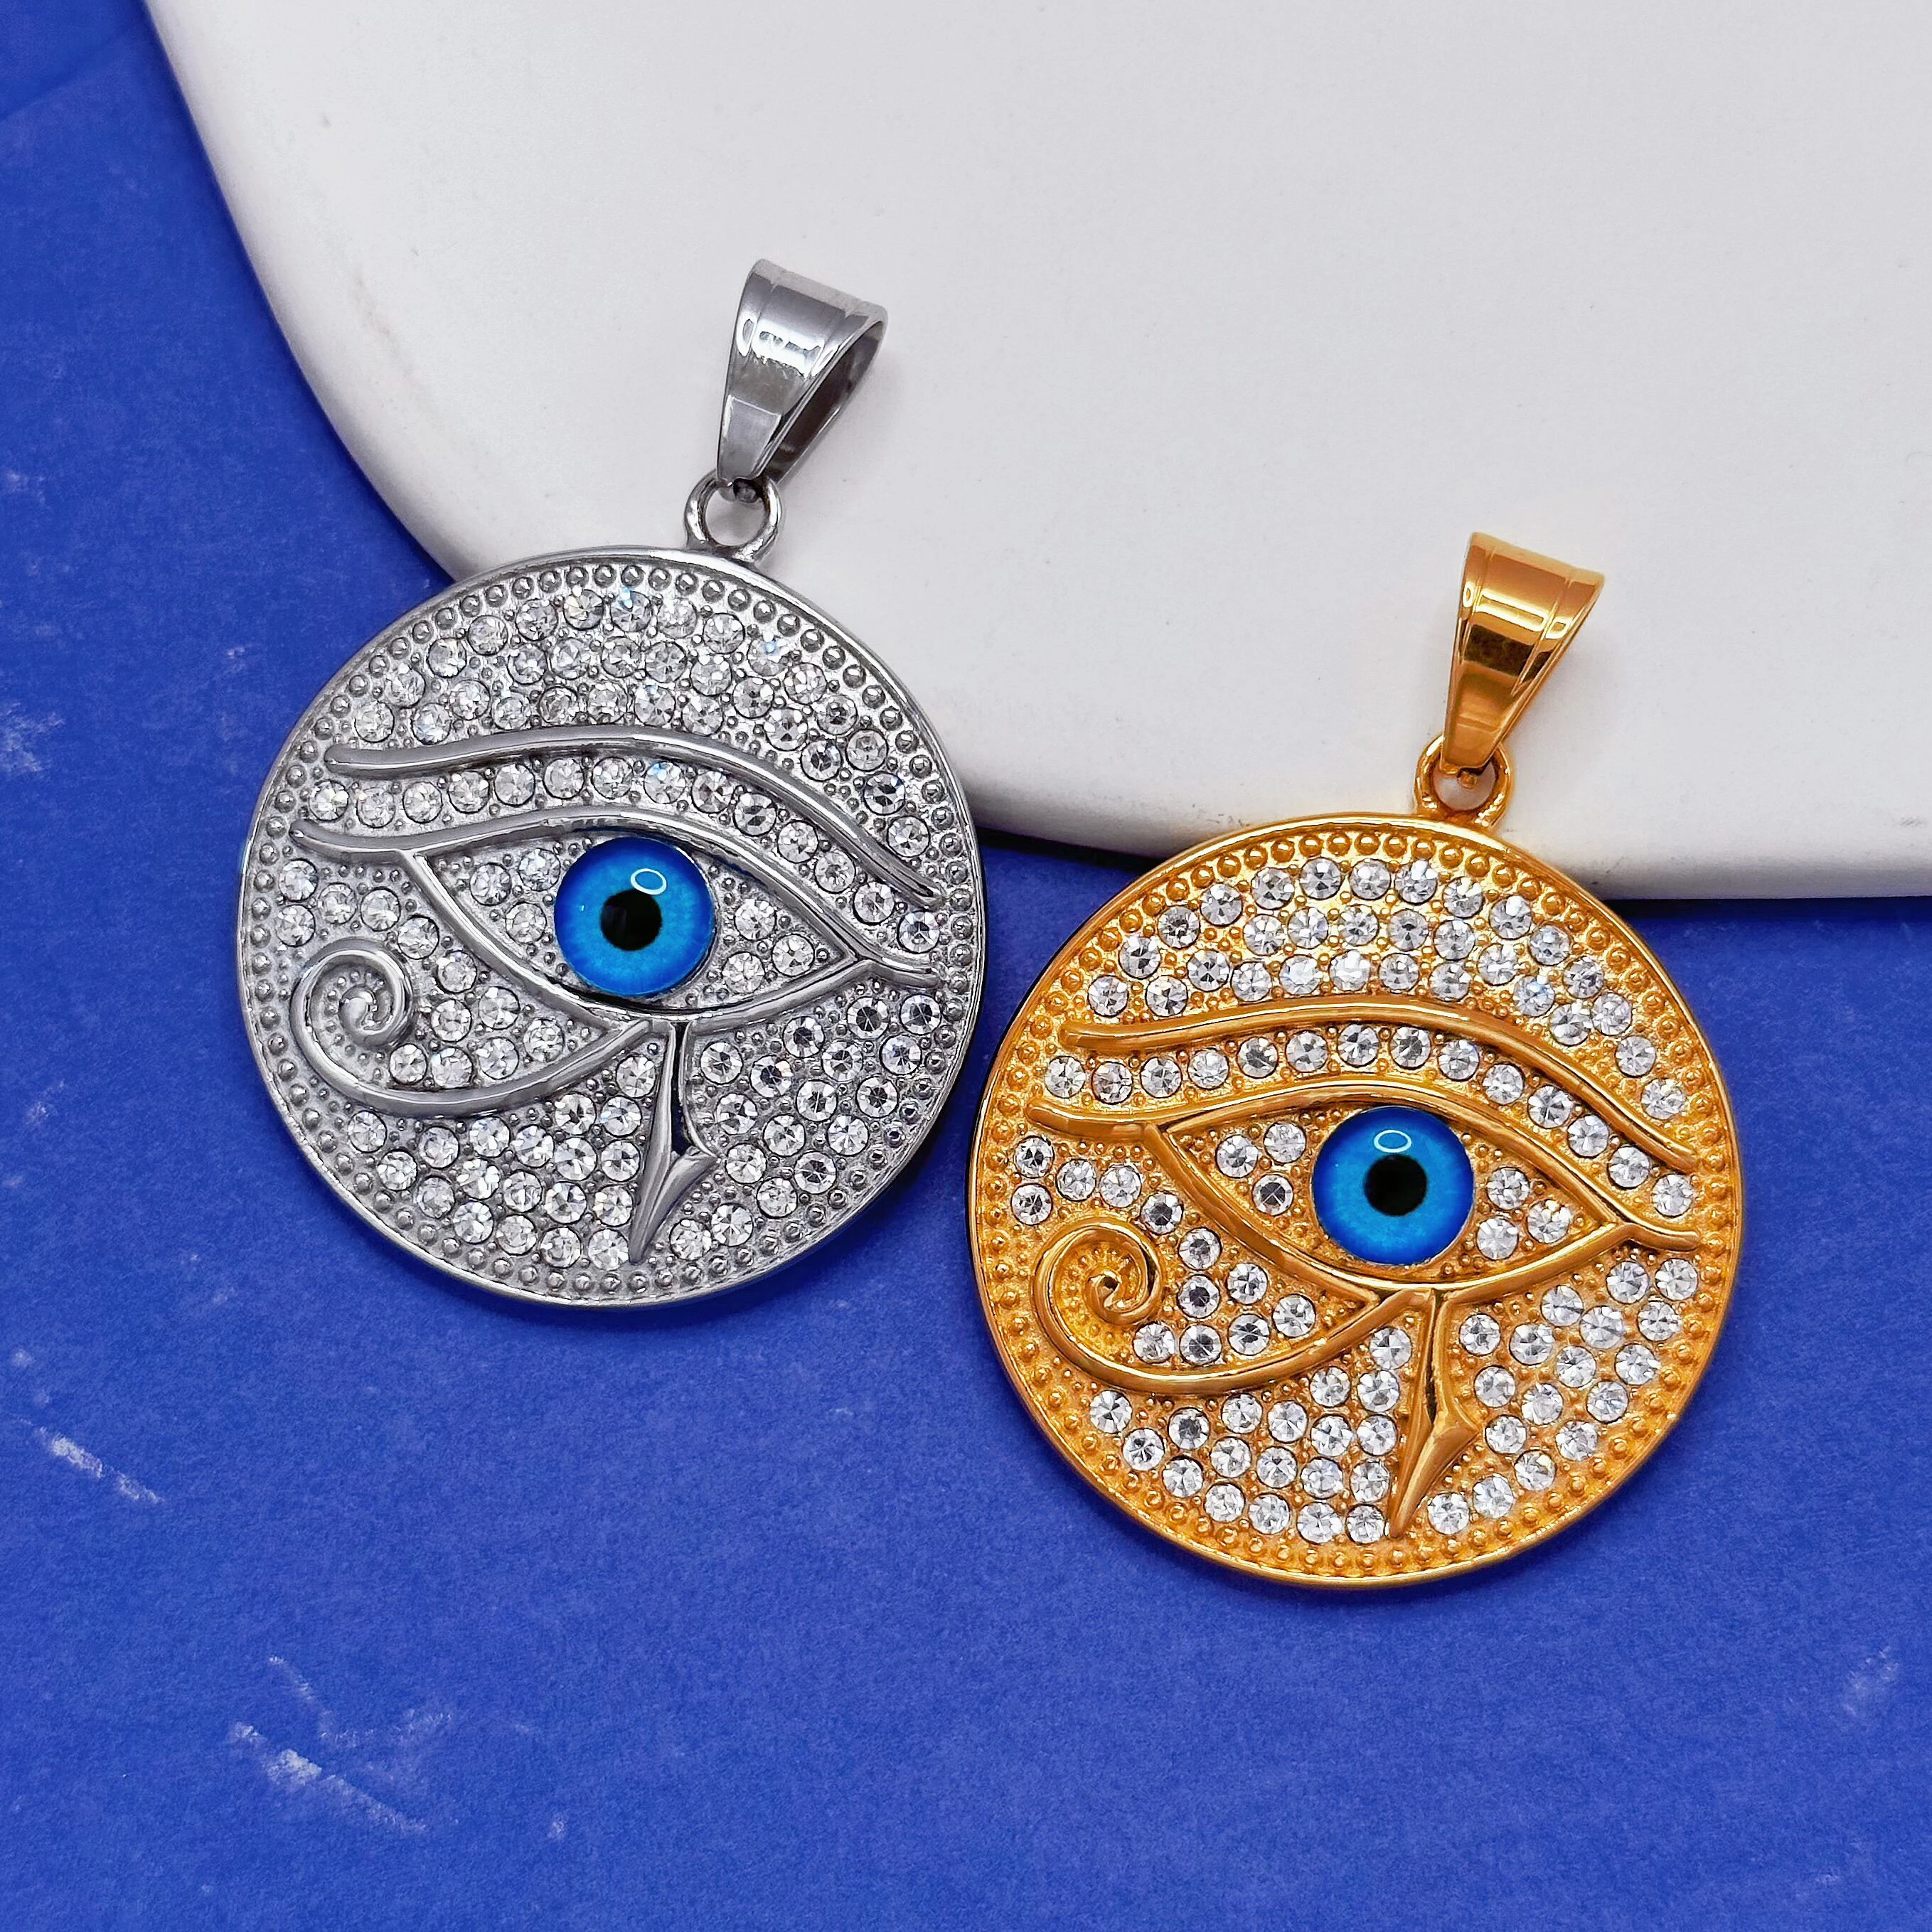 

18k Gold Plated Stainless Steel Jewelry Cz Stone Egyptian Mythology Eye Of Horus Pendant For Women Men